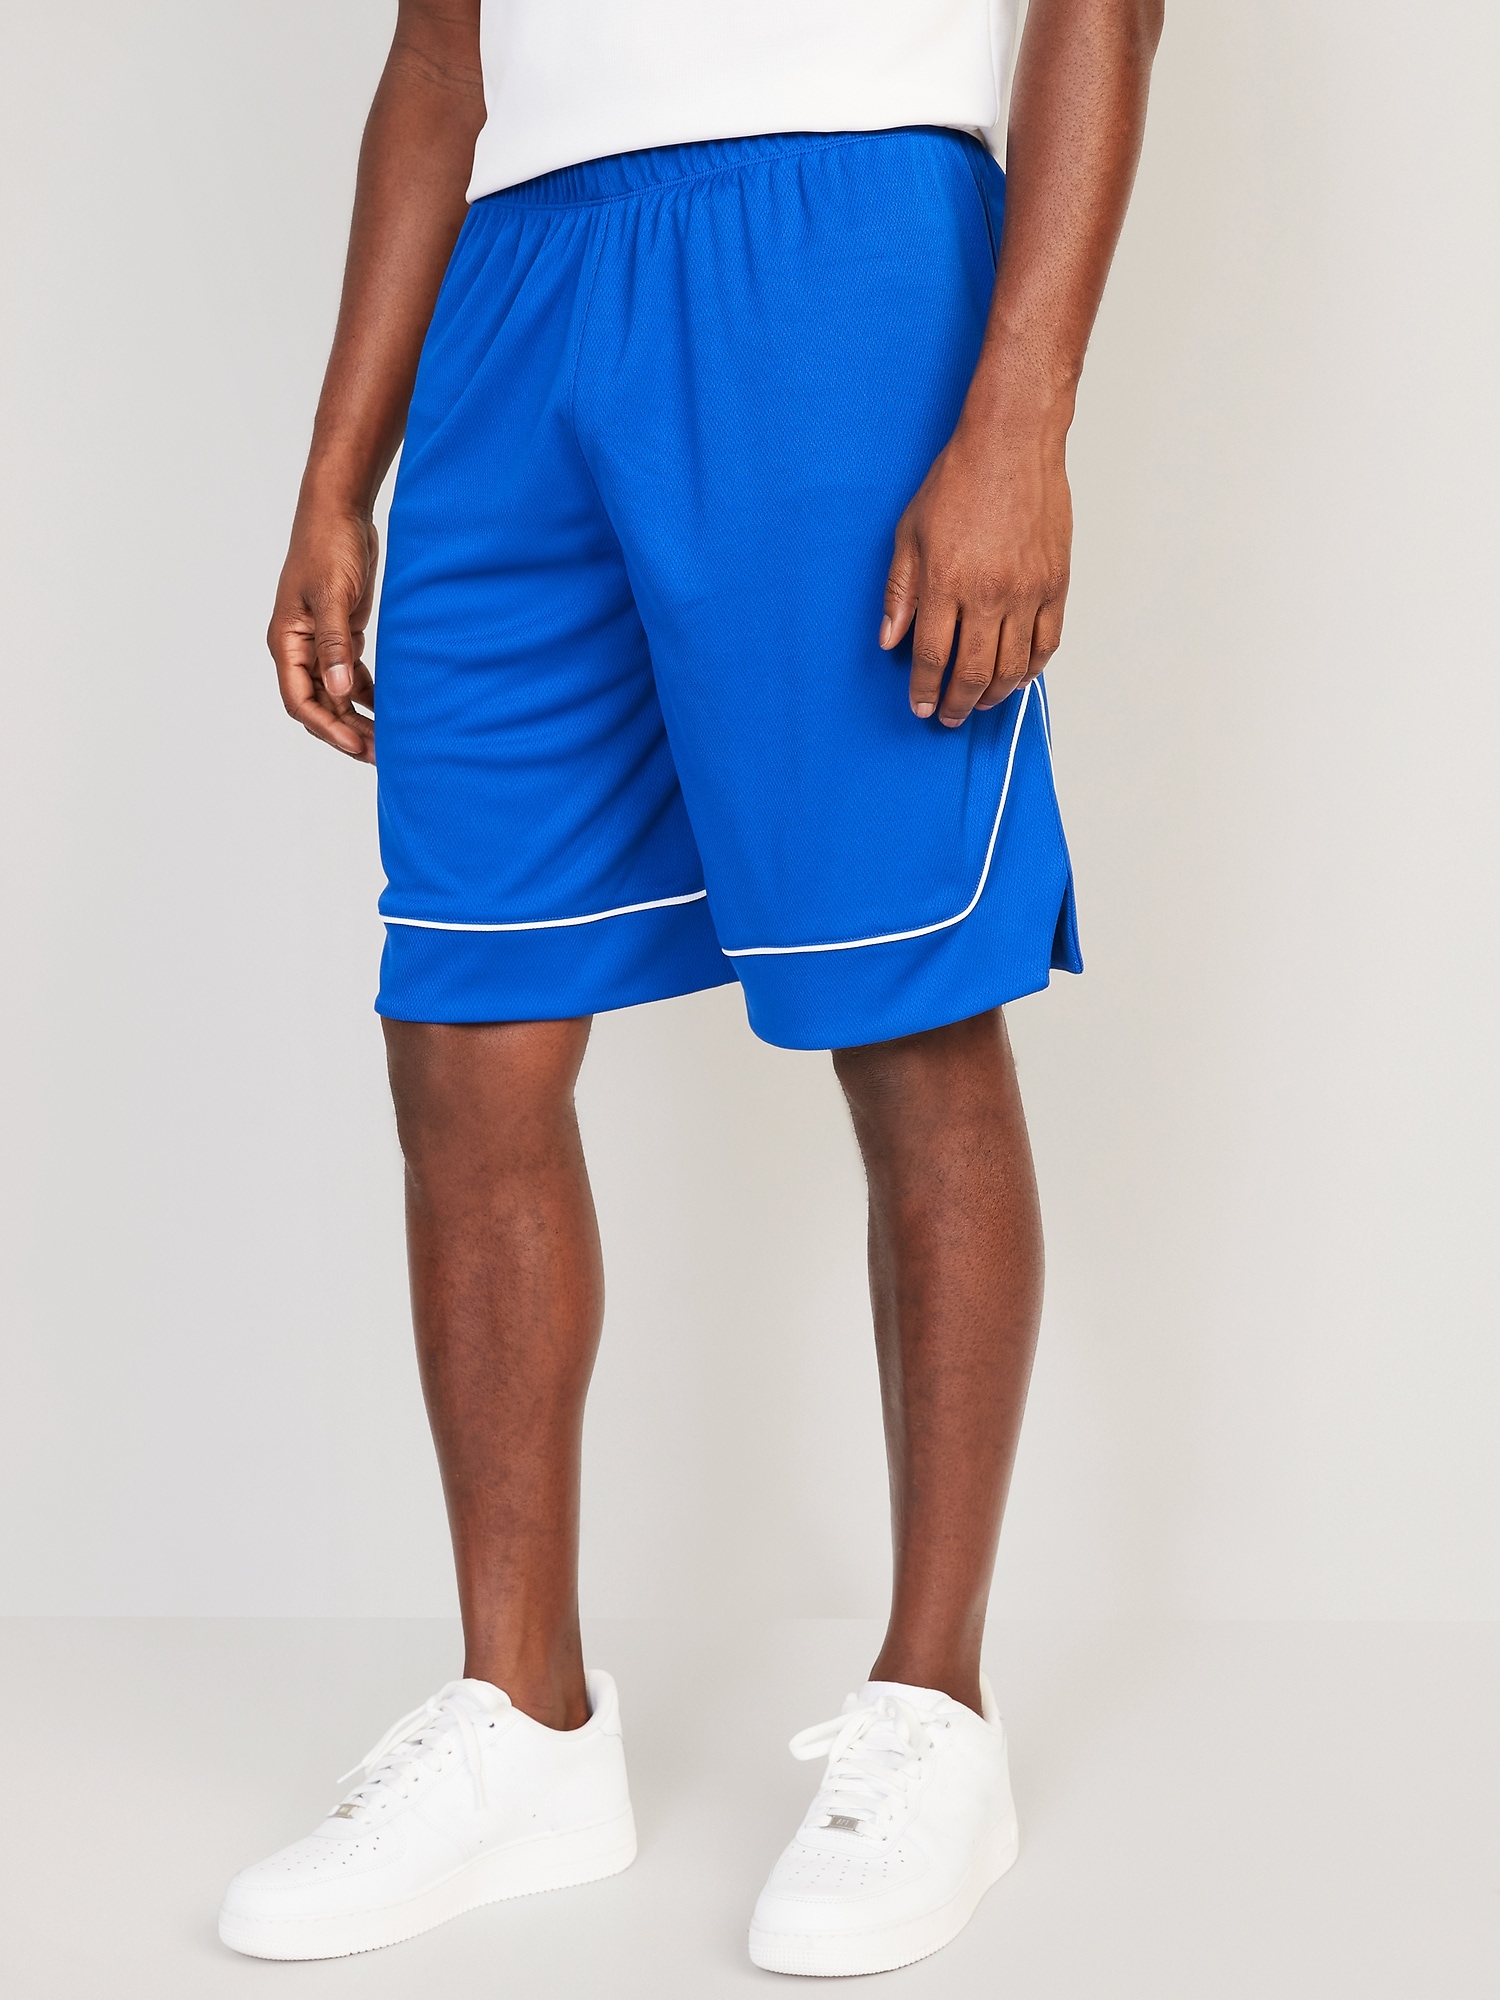 Old Navy Mesh Basketball Shorts -- 10-inch inseam blue. 1